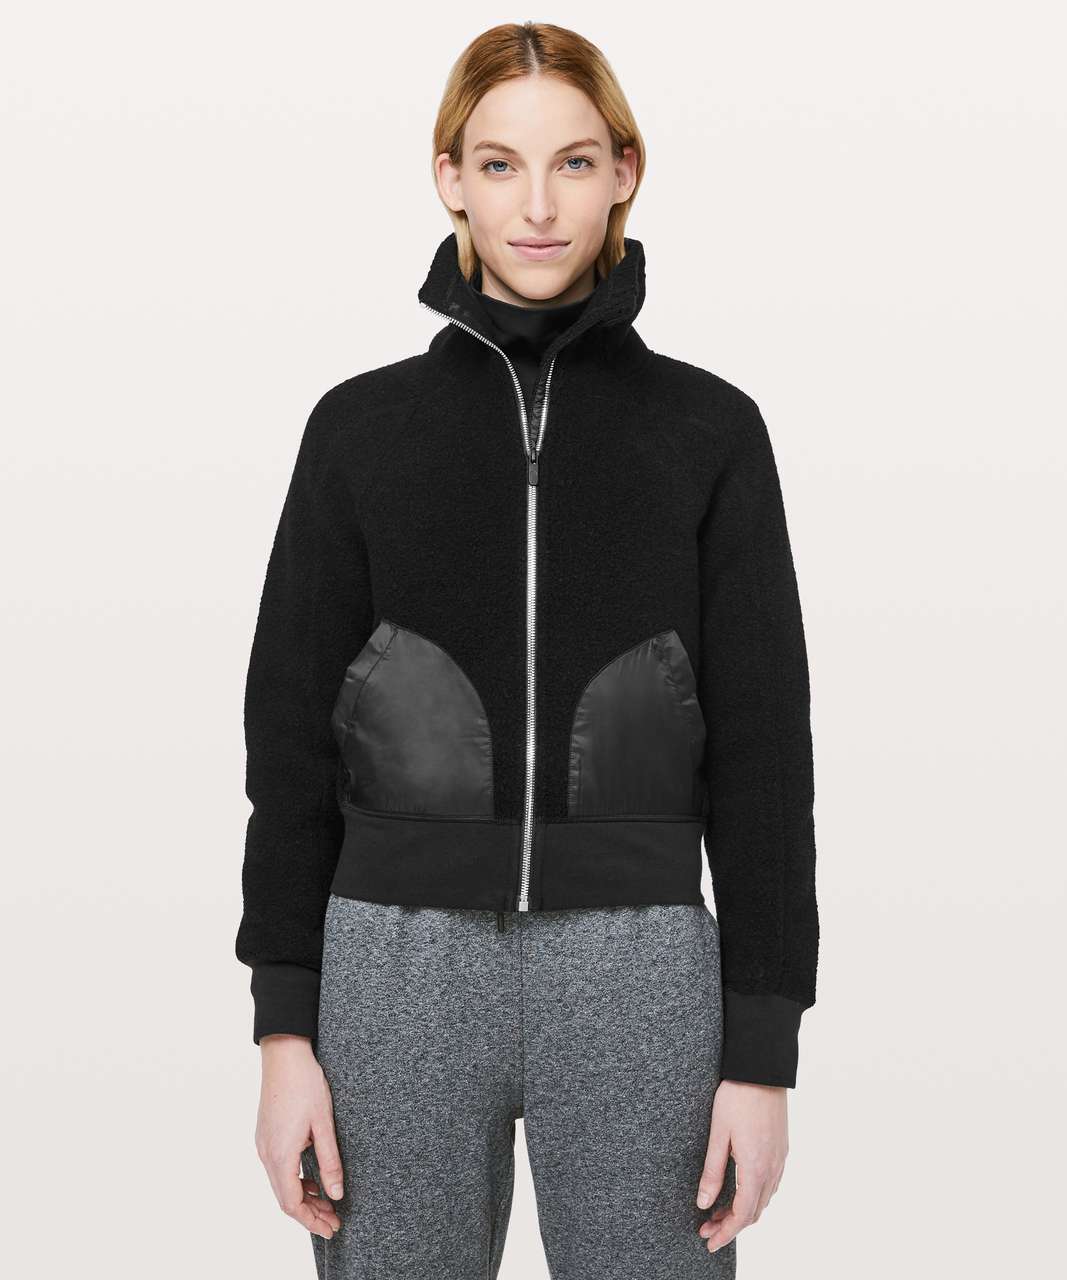 so sherpa hooded jacket lululemon